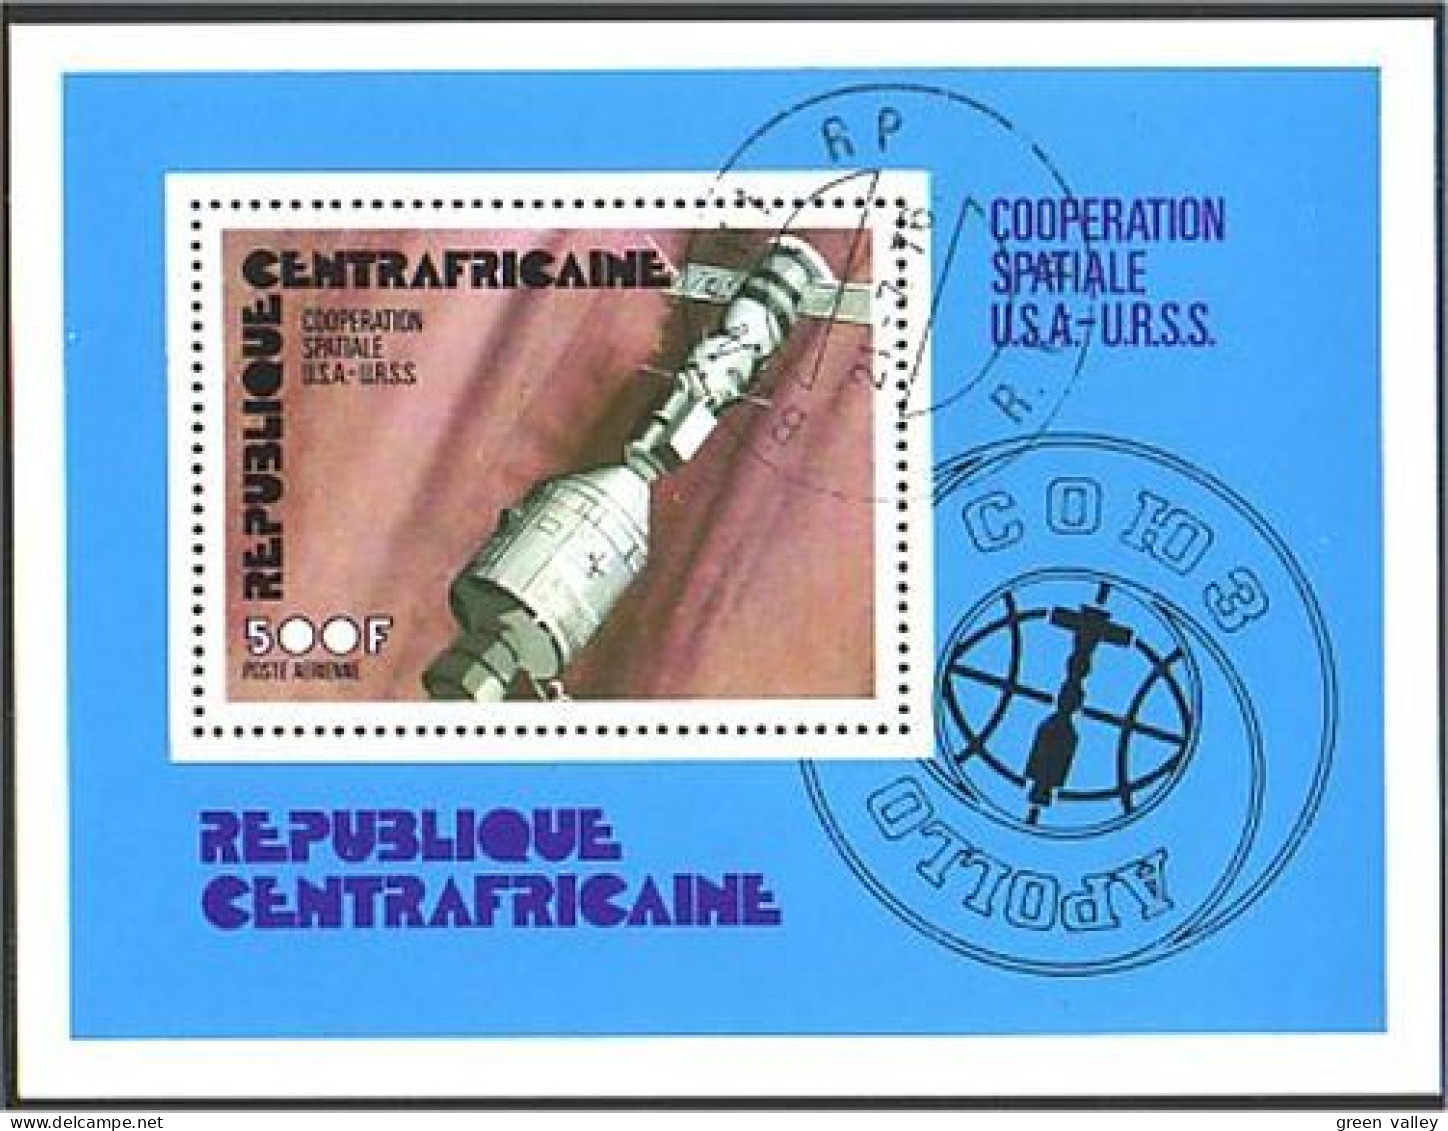 Centrafrique Cooperation Spatiale USA-URSS (A51-461) - Indépendance USA